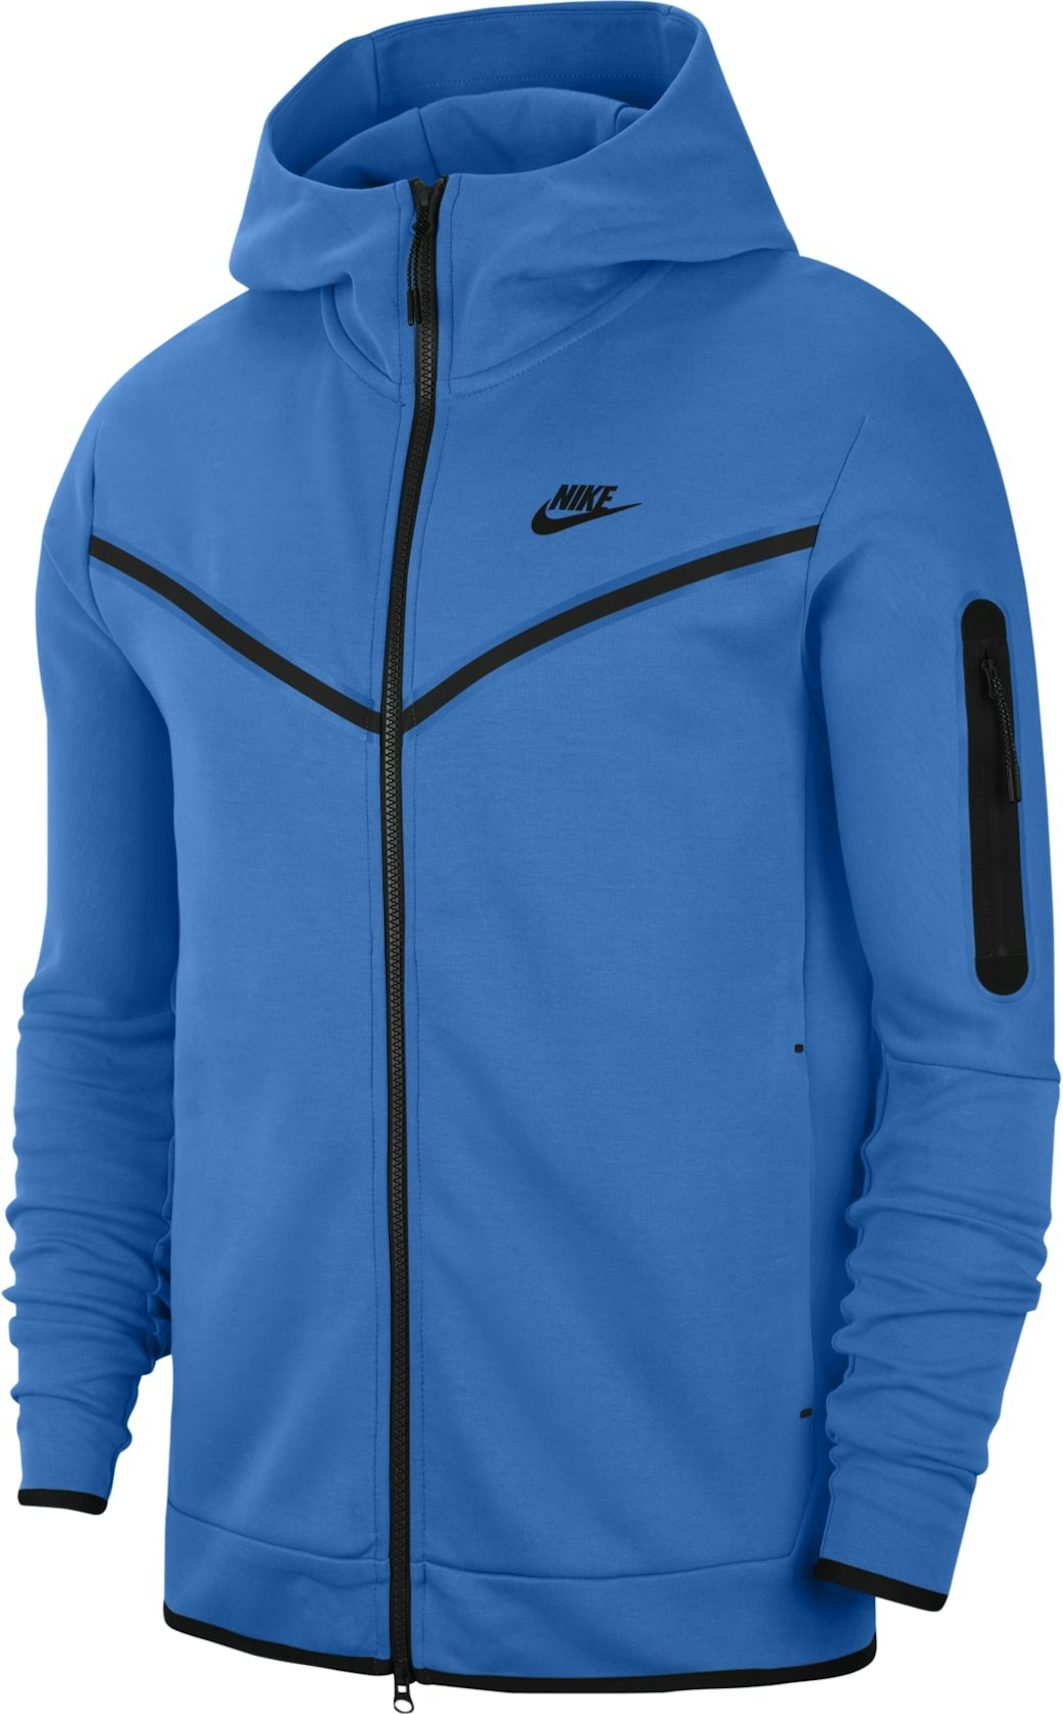 Nike Red Tag Tech Fleece Full Zip Blue Hoodie Sweatshirt Size Large